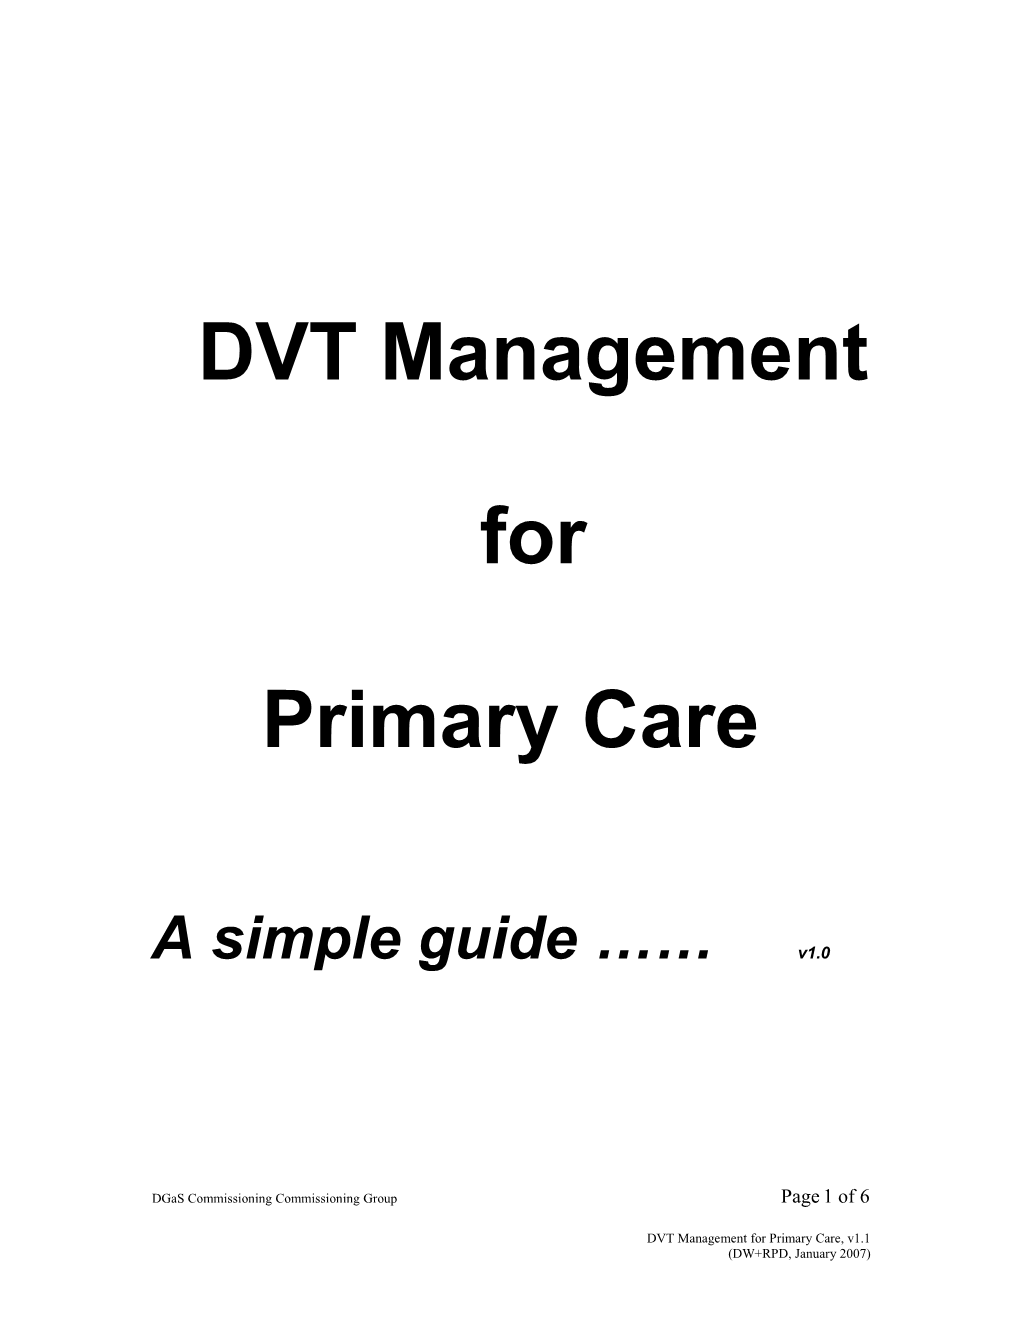 Managing DVT in Primary Care